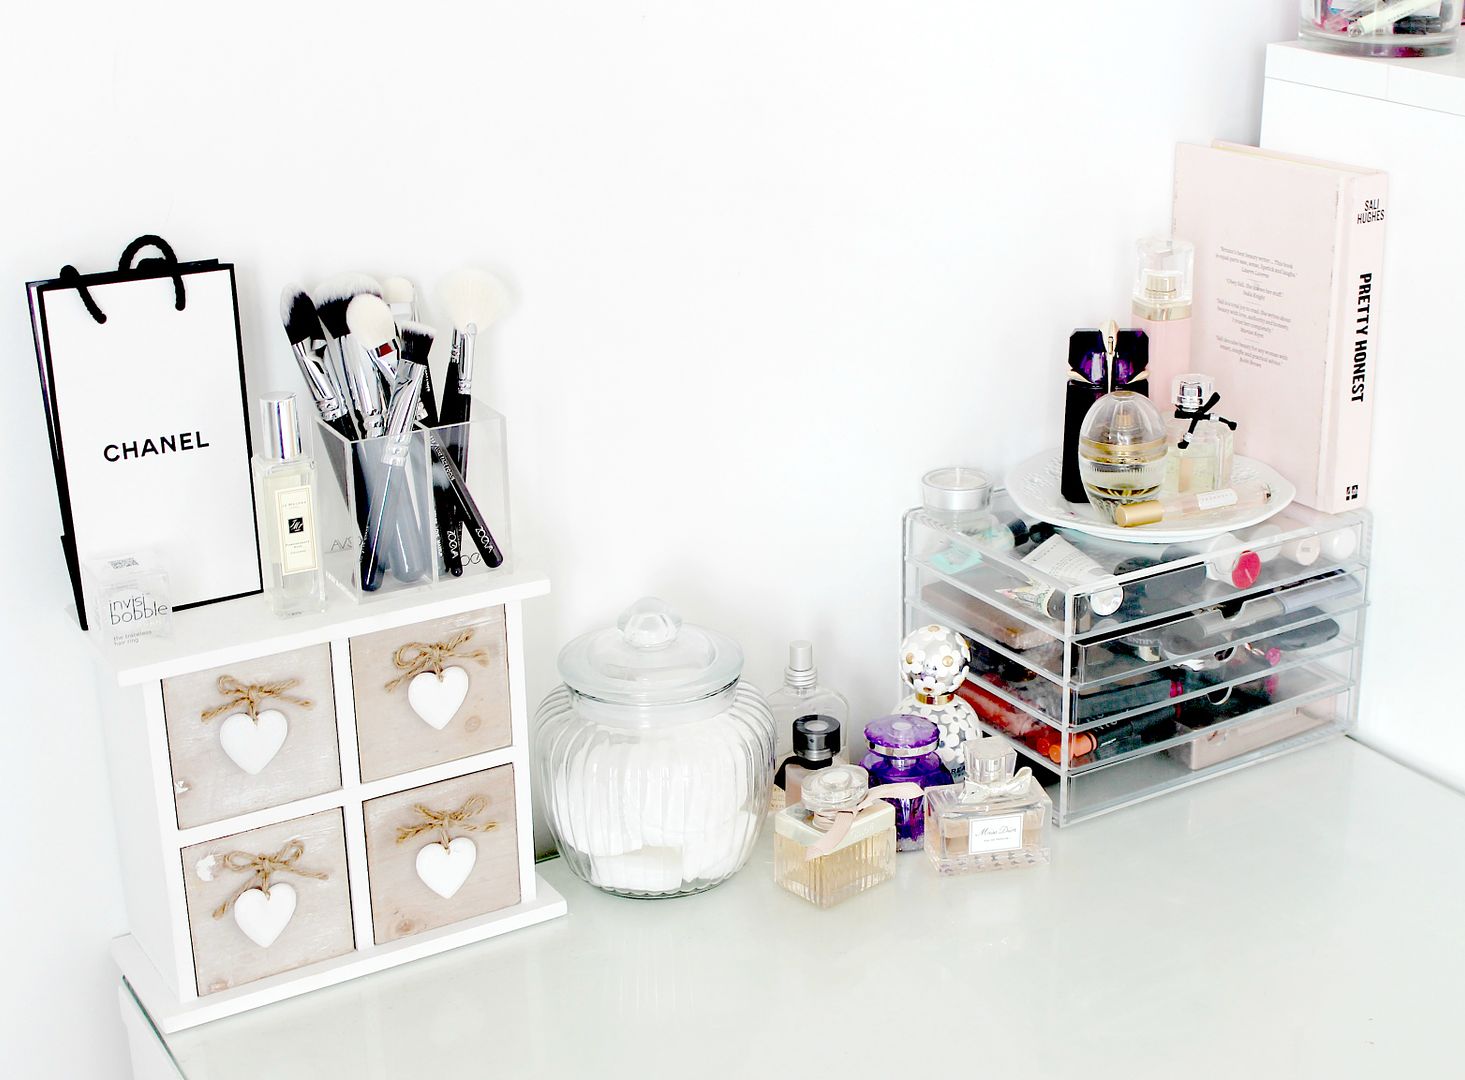 IKEA Malm Dressing Table, Makeup and Beauty Storage Ideas, Makeup Storage Inspiration, Muji Acrylic Drawers, My Dressing Table and Makeup Storage,